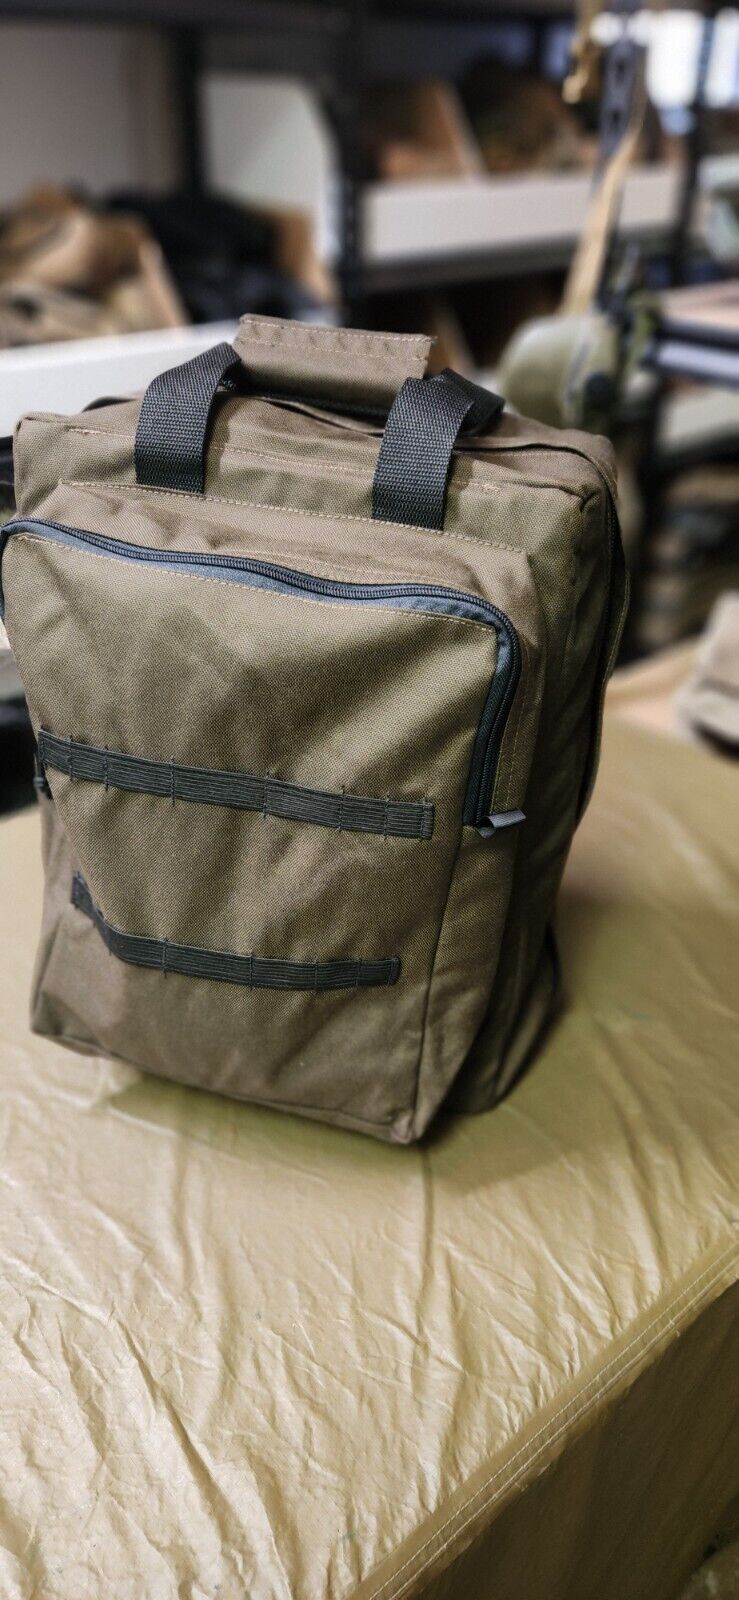 Usgi Medical Bag/pack/go bag unused condition SOCOM, ODA, Seal, MARSOC